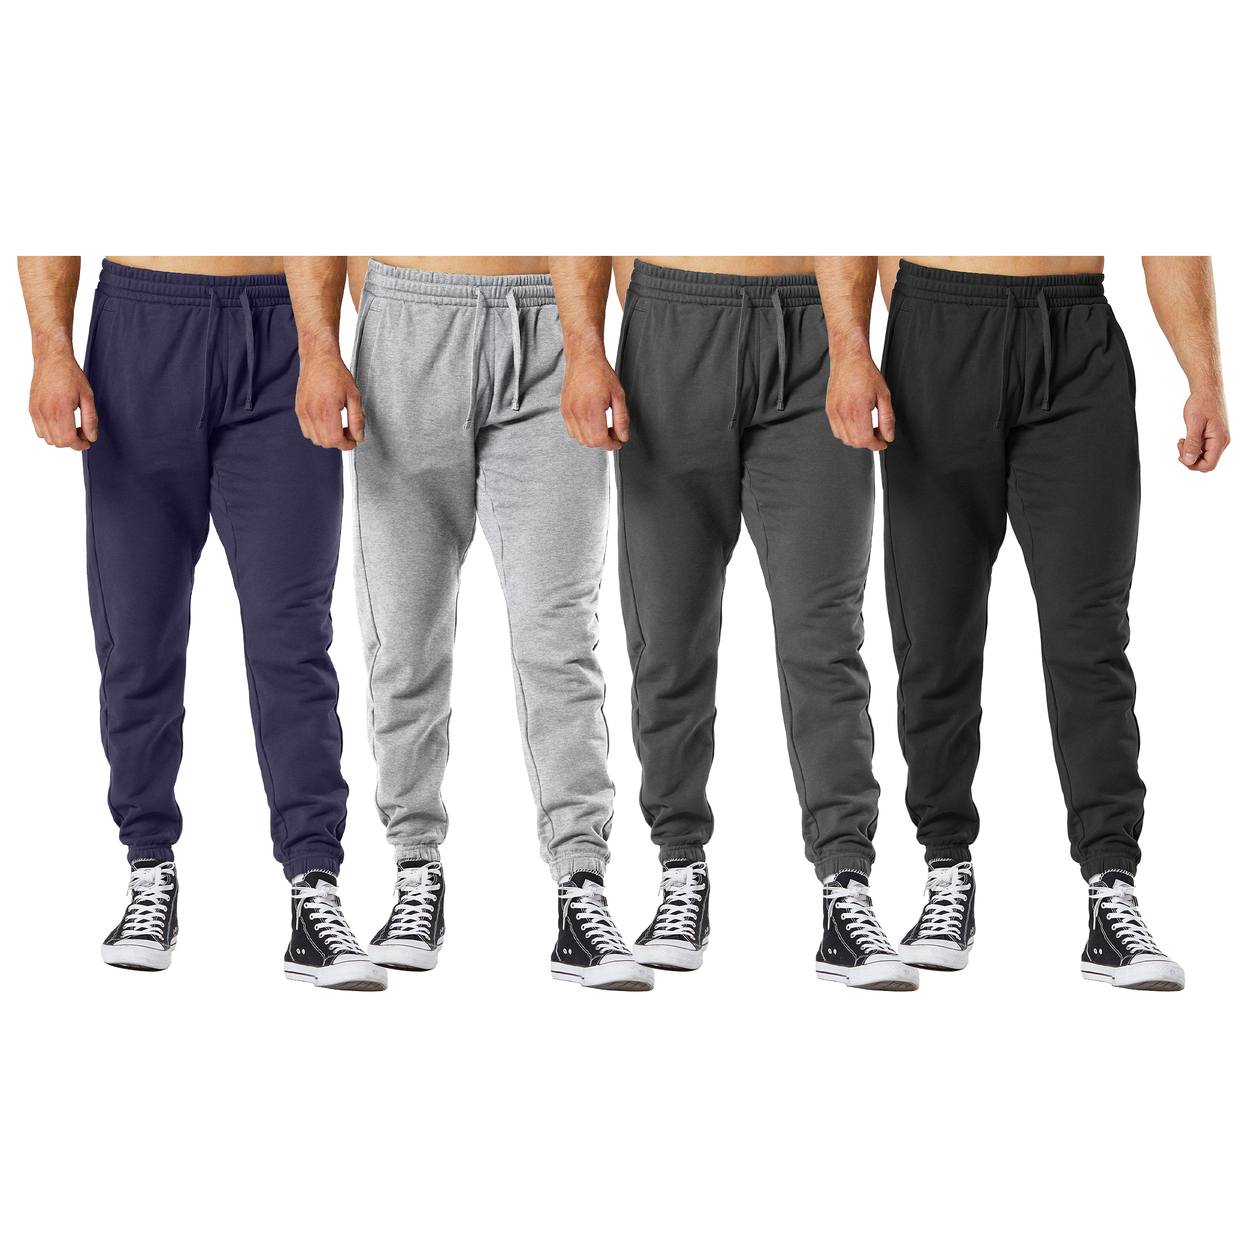 Men's Ultra-Soft Cozy Winter Warm Casual Fleece Lined Sweatpants Jogger - Navy, Small